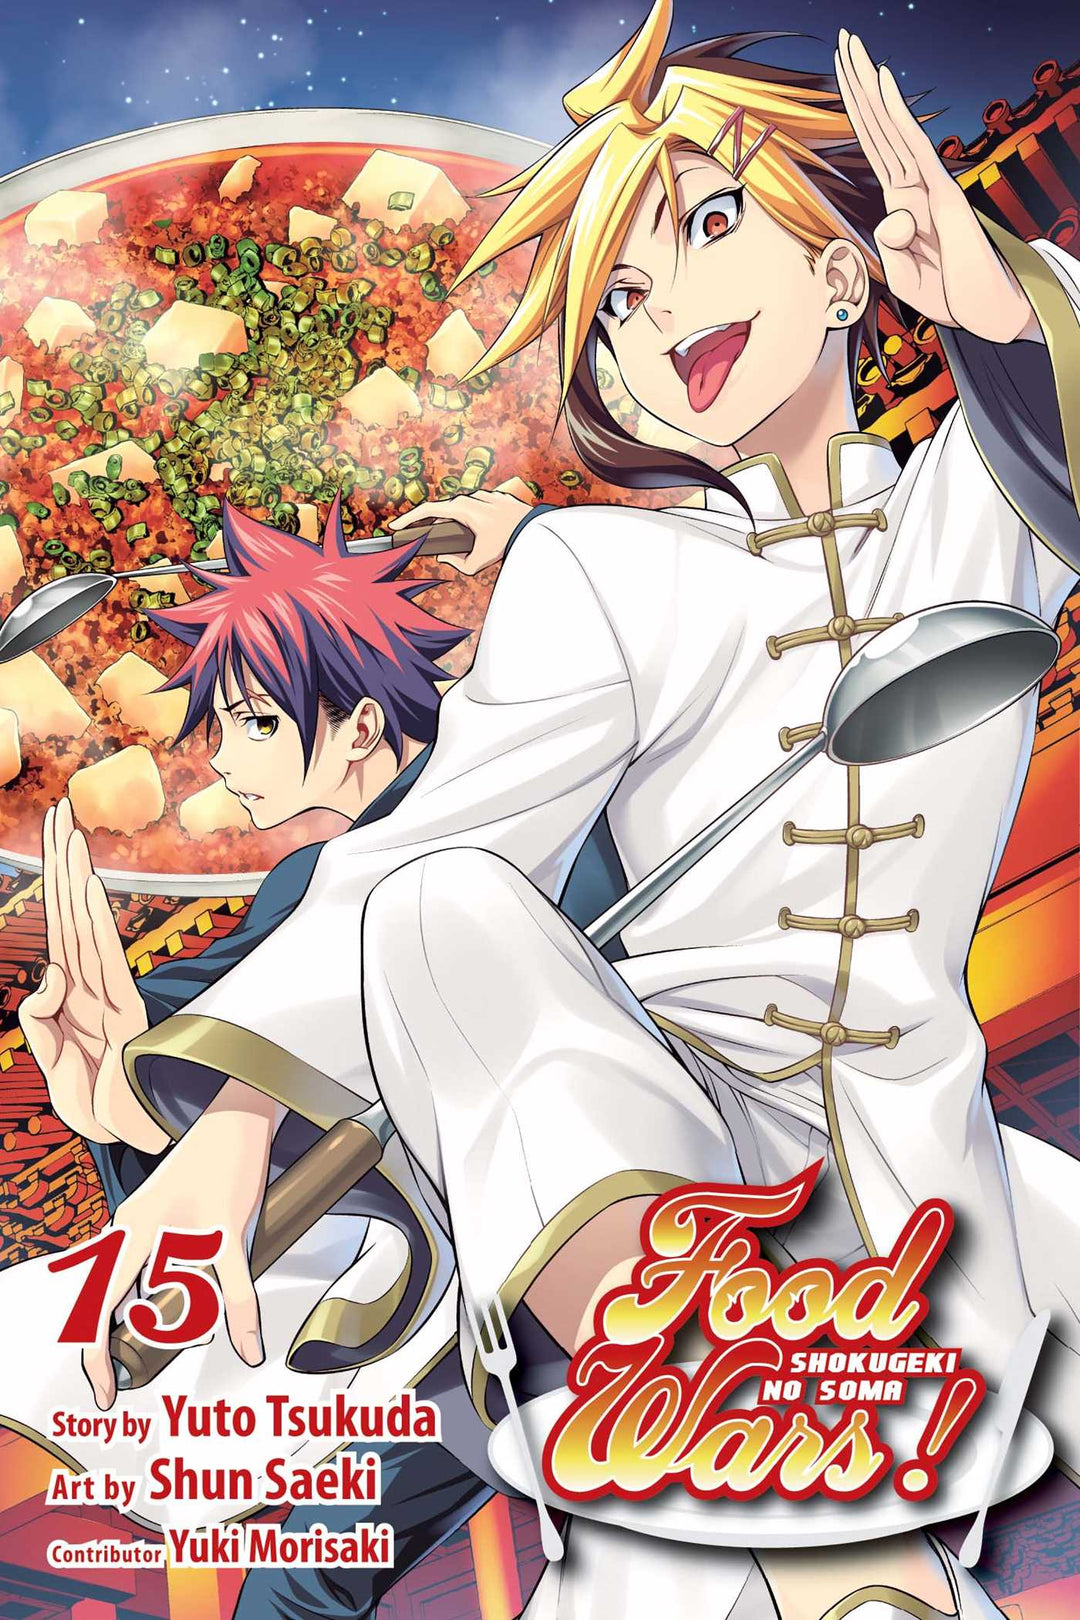 Food Wars!: Shokugeki no Soma, Vol. 15 - Manga Mate